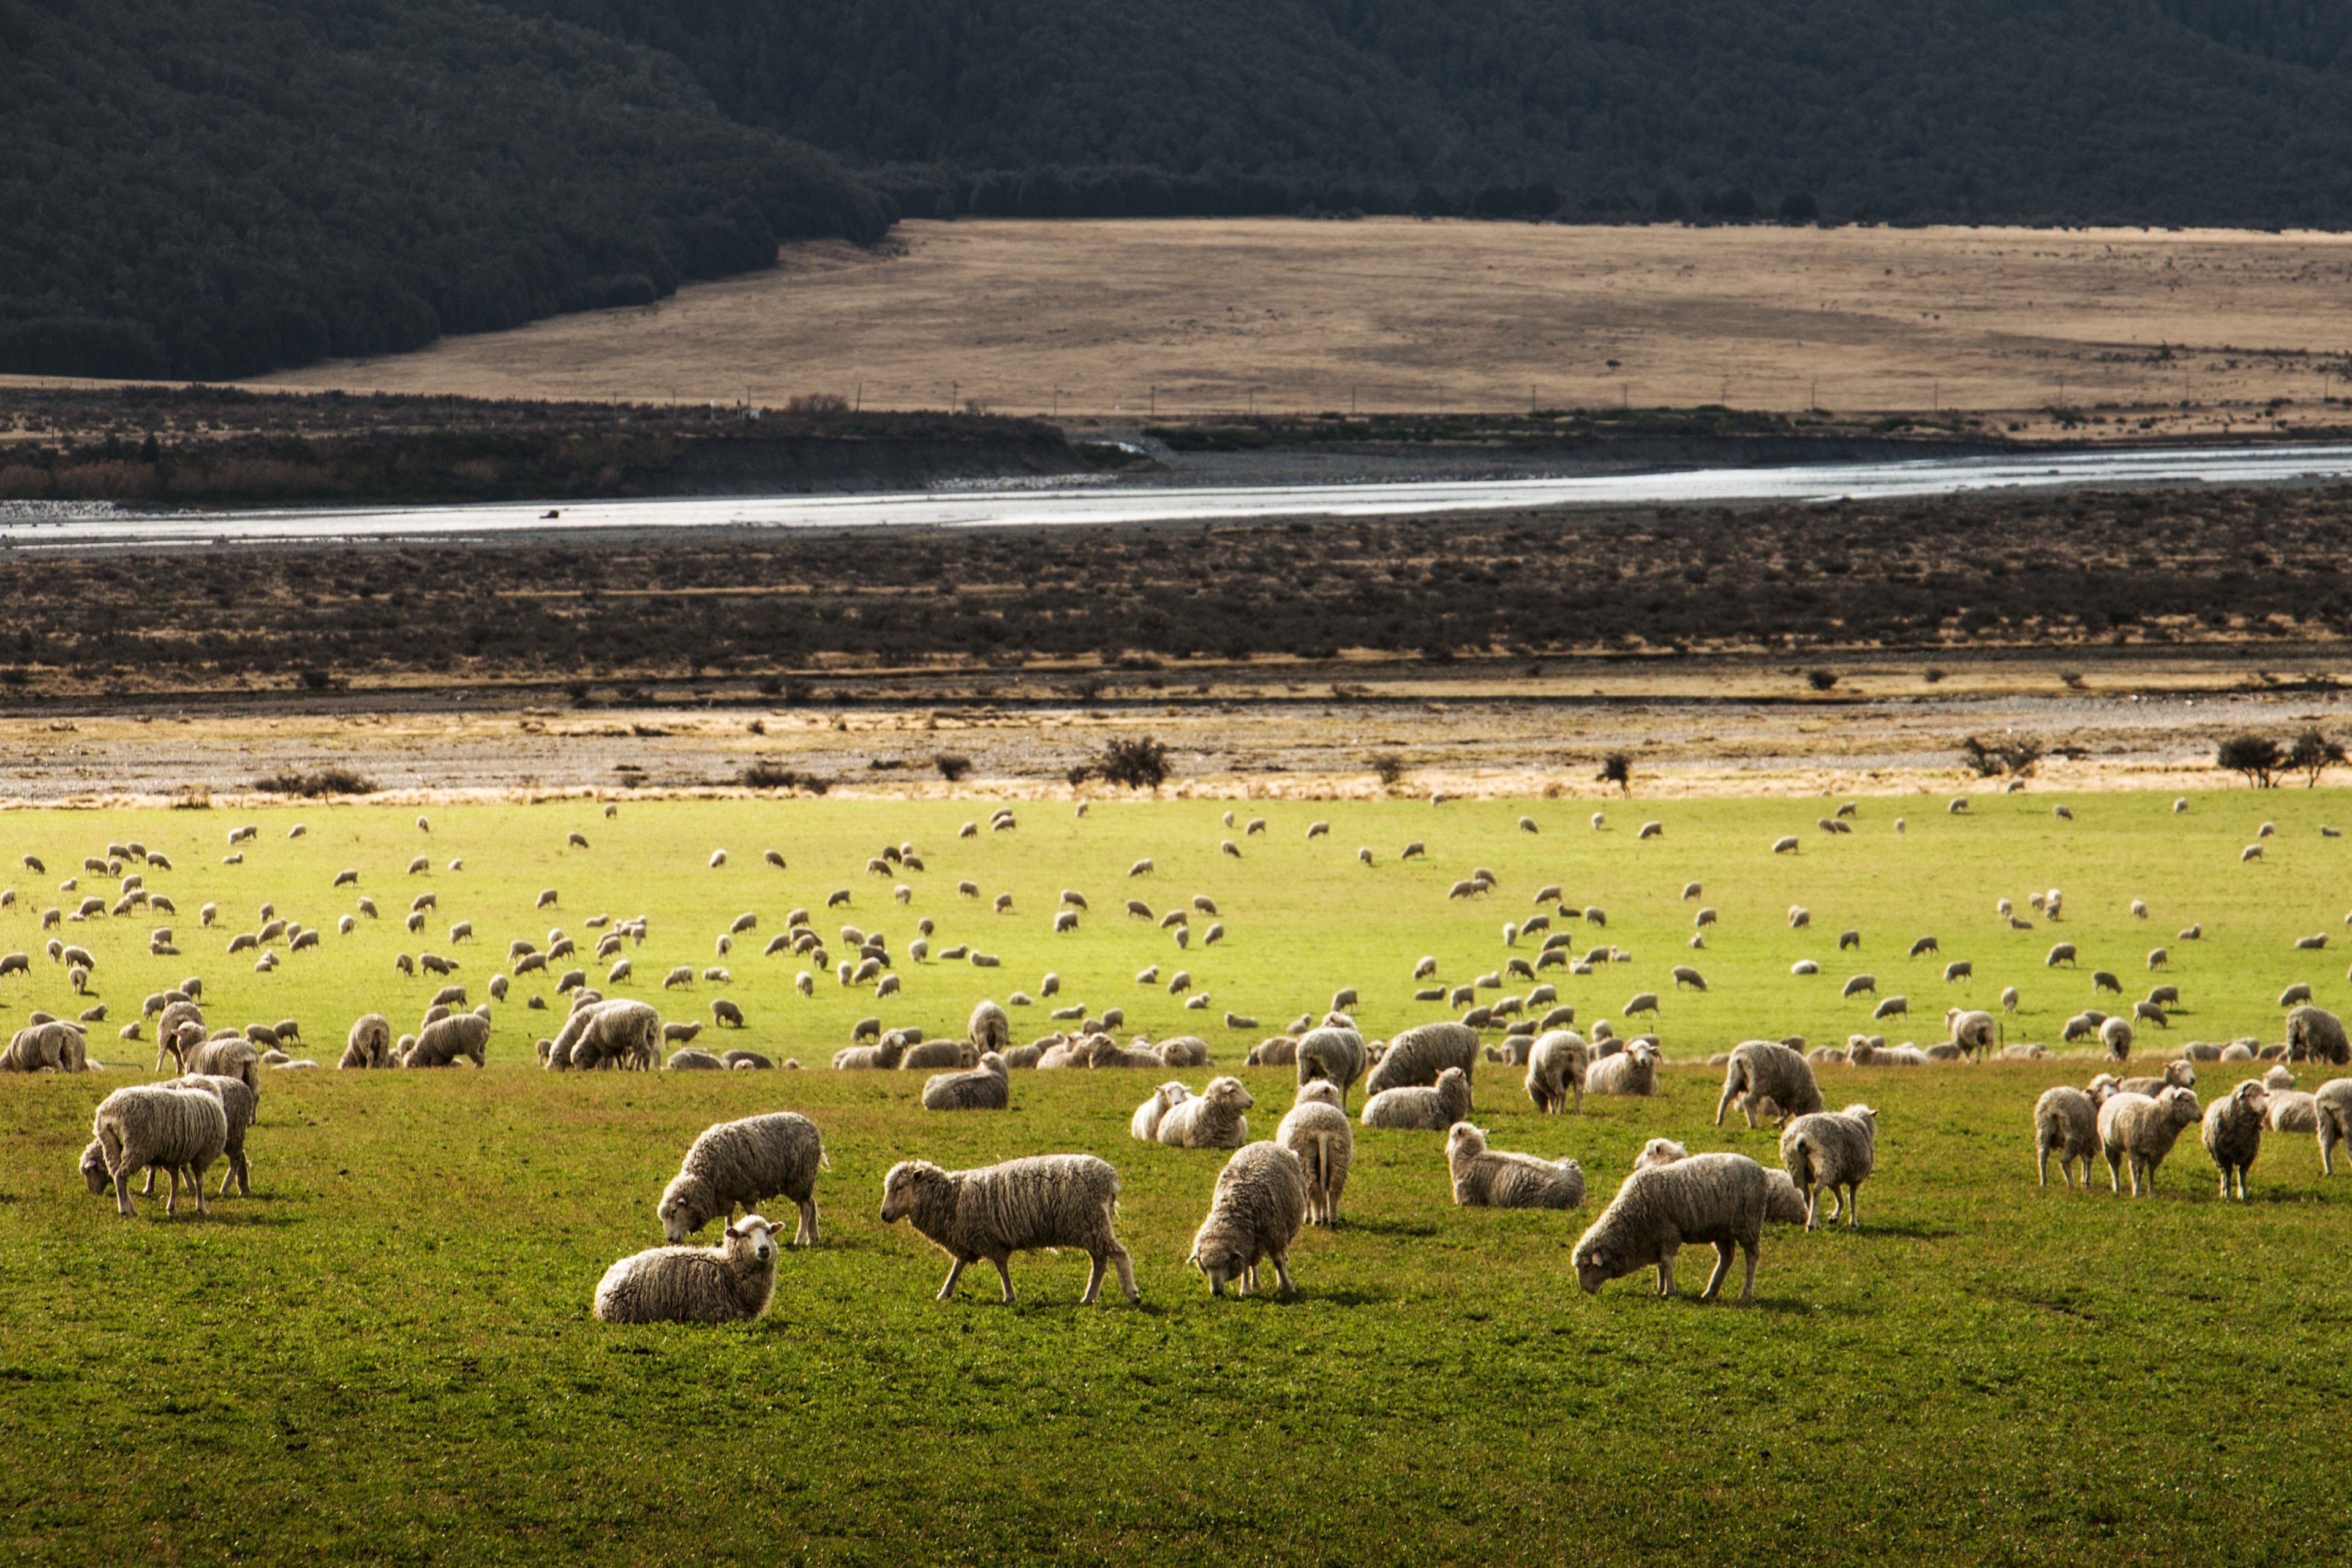 Wallpaper / a field of dozens of sheep grazing and walking around on green grass beside a highway curring through a desert plain and a dark forest, sheep grazing 4k